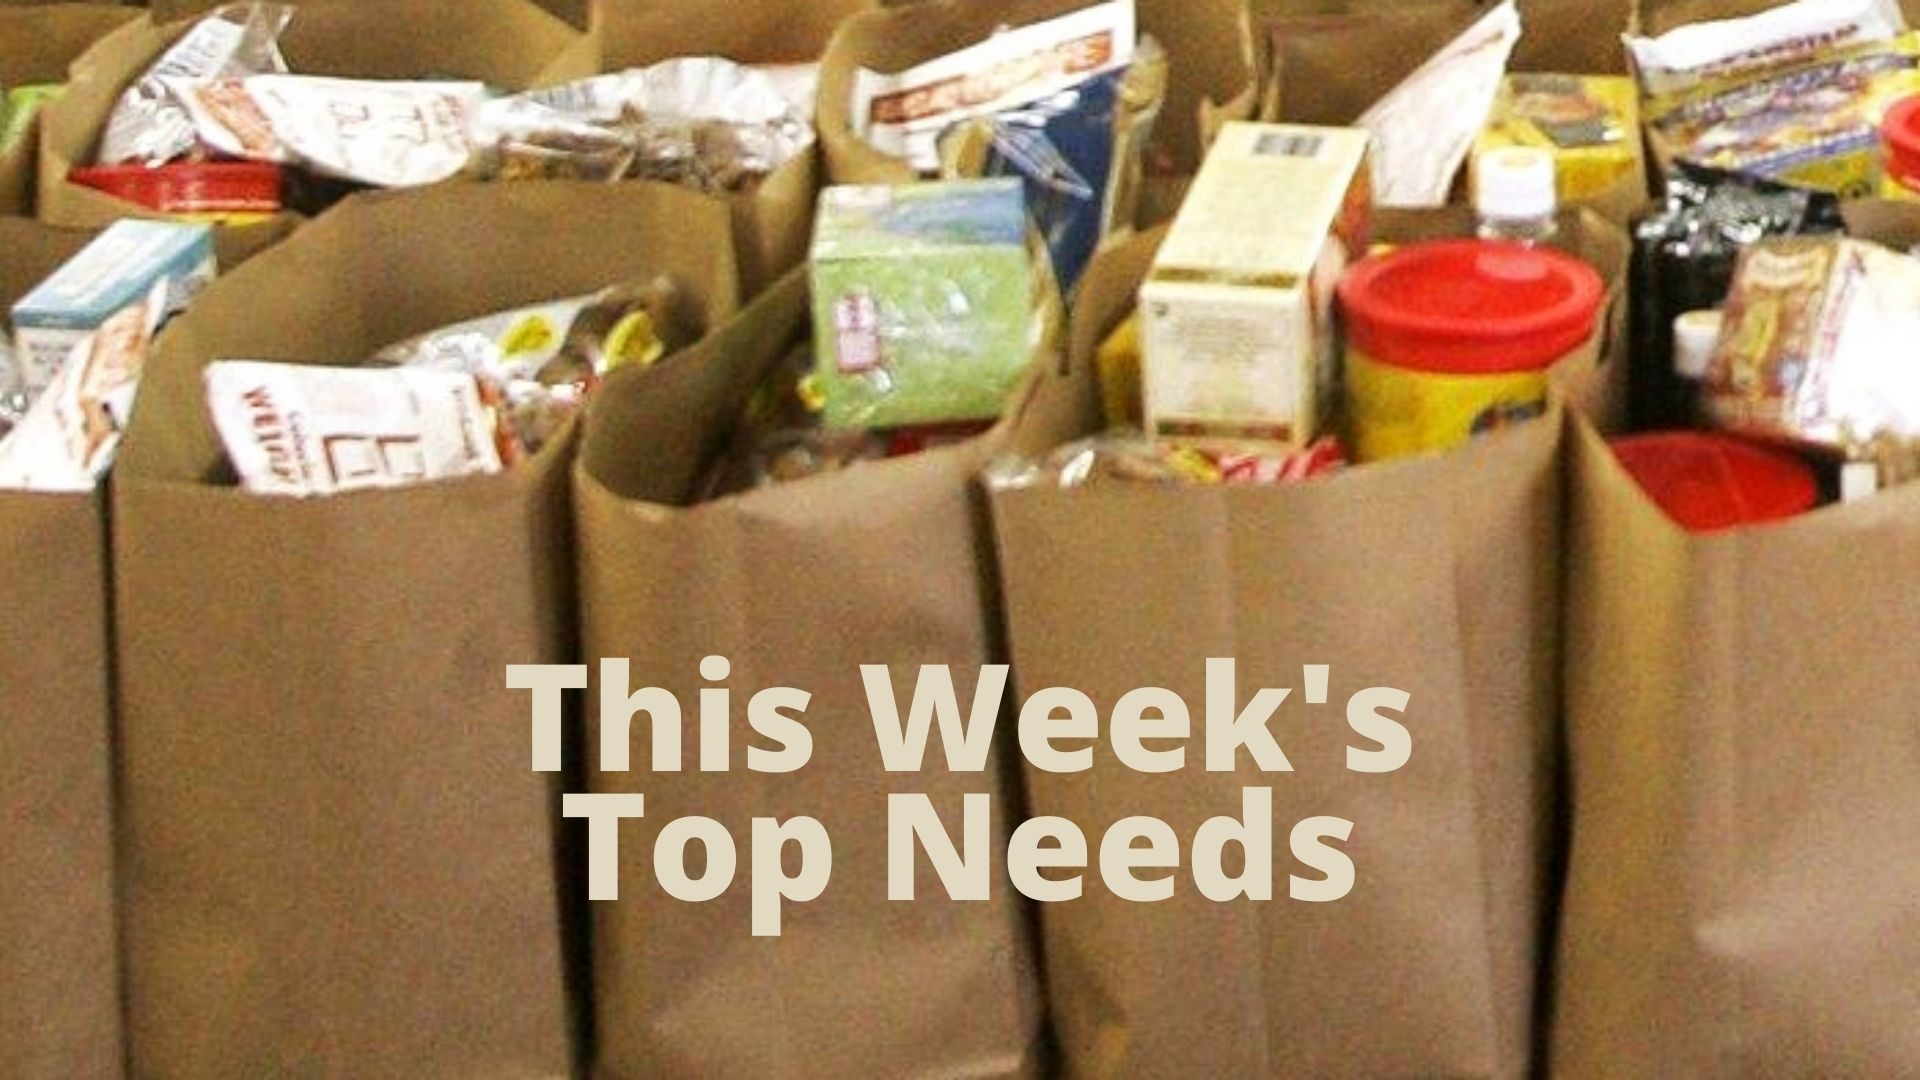 Feeding those in Need – Food Pantry